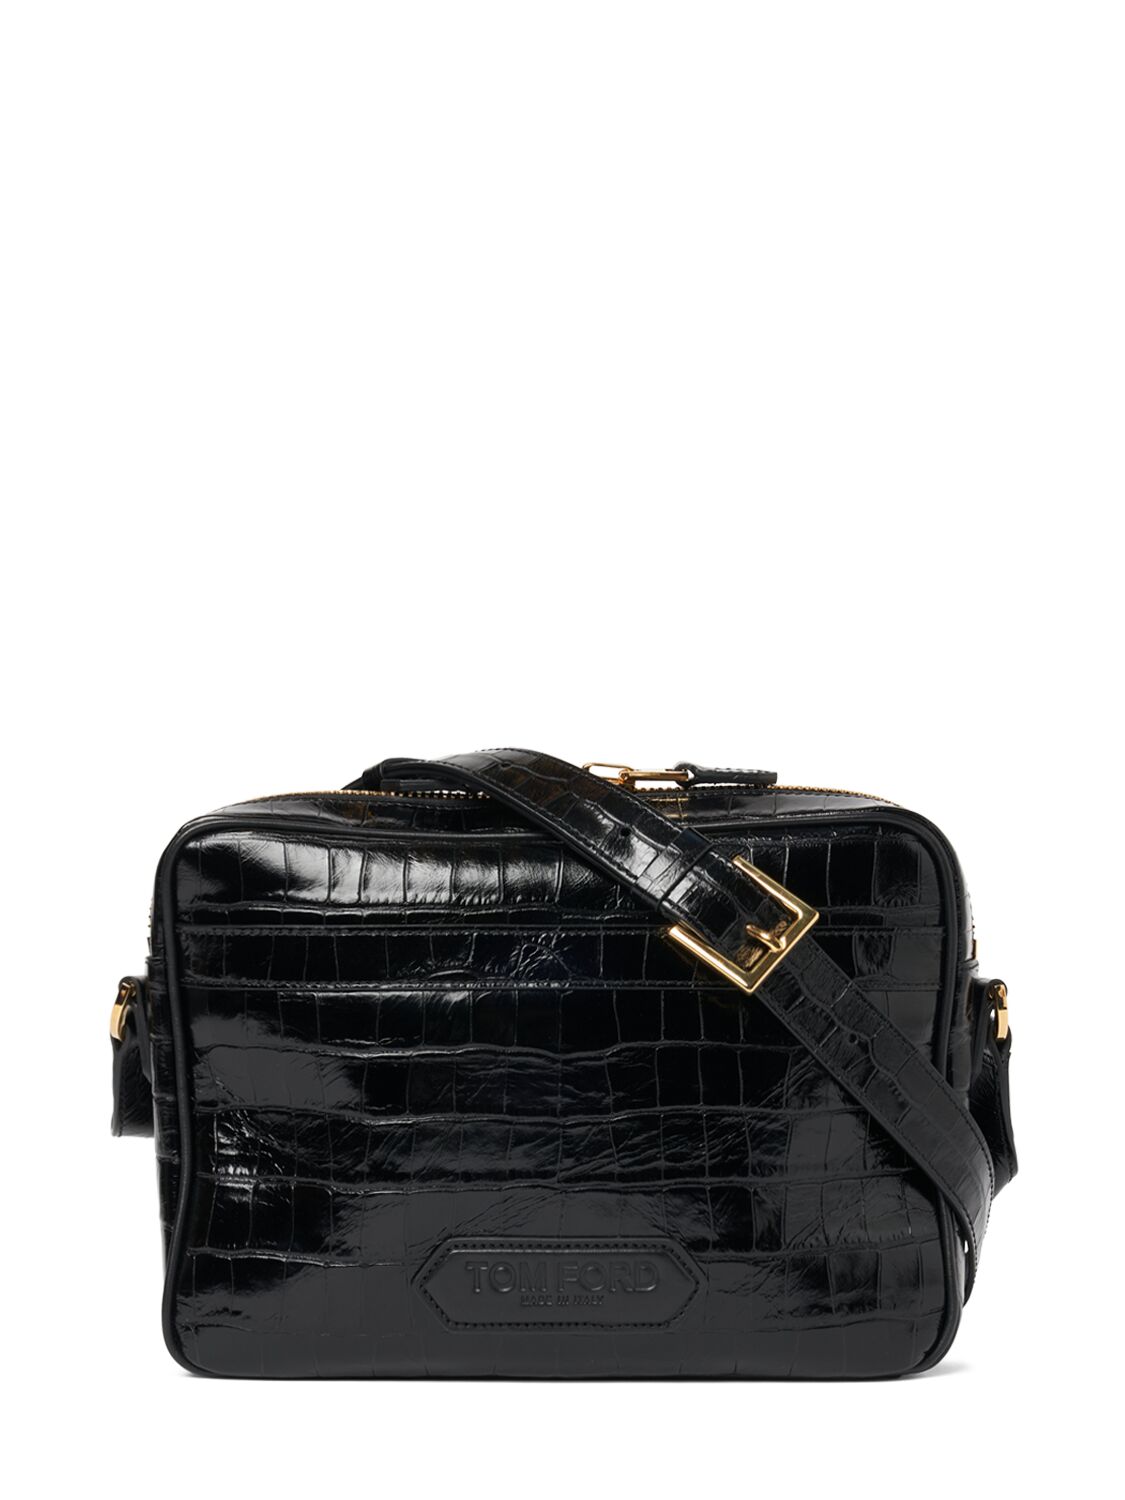 Image of Small Croc Embossed Messenger Bag